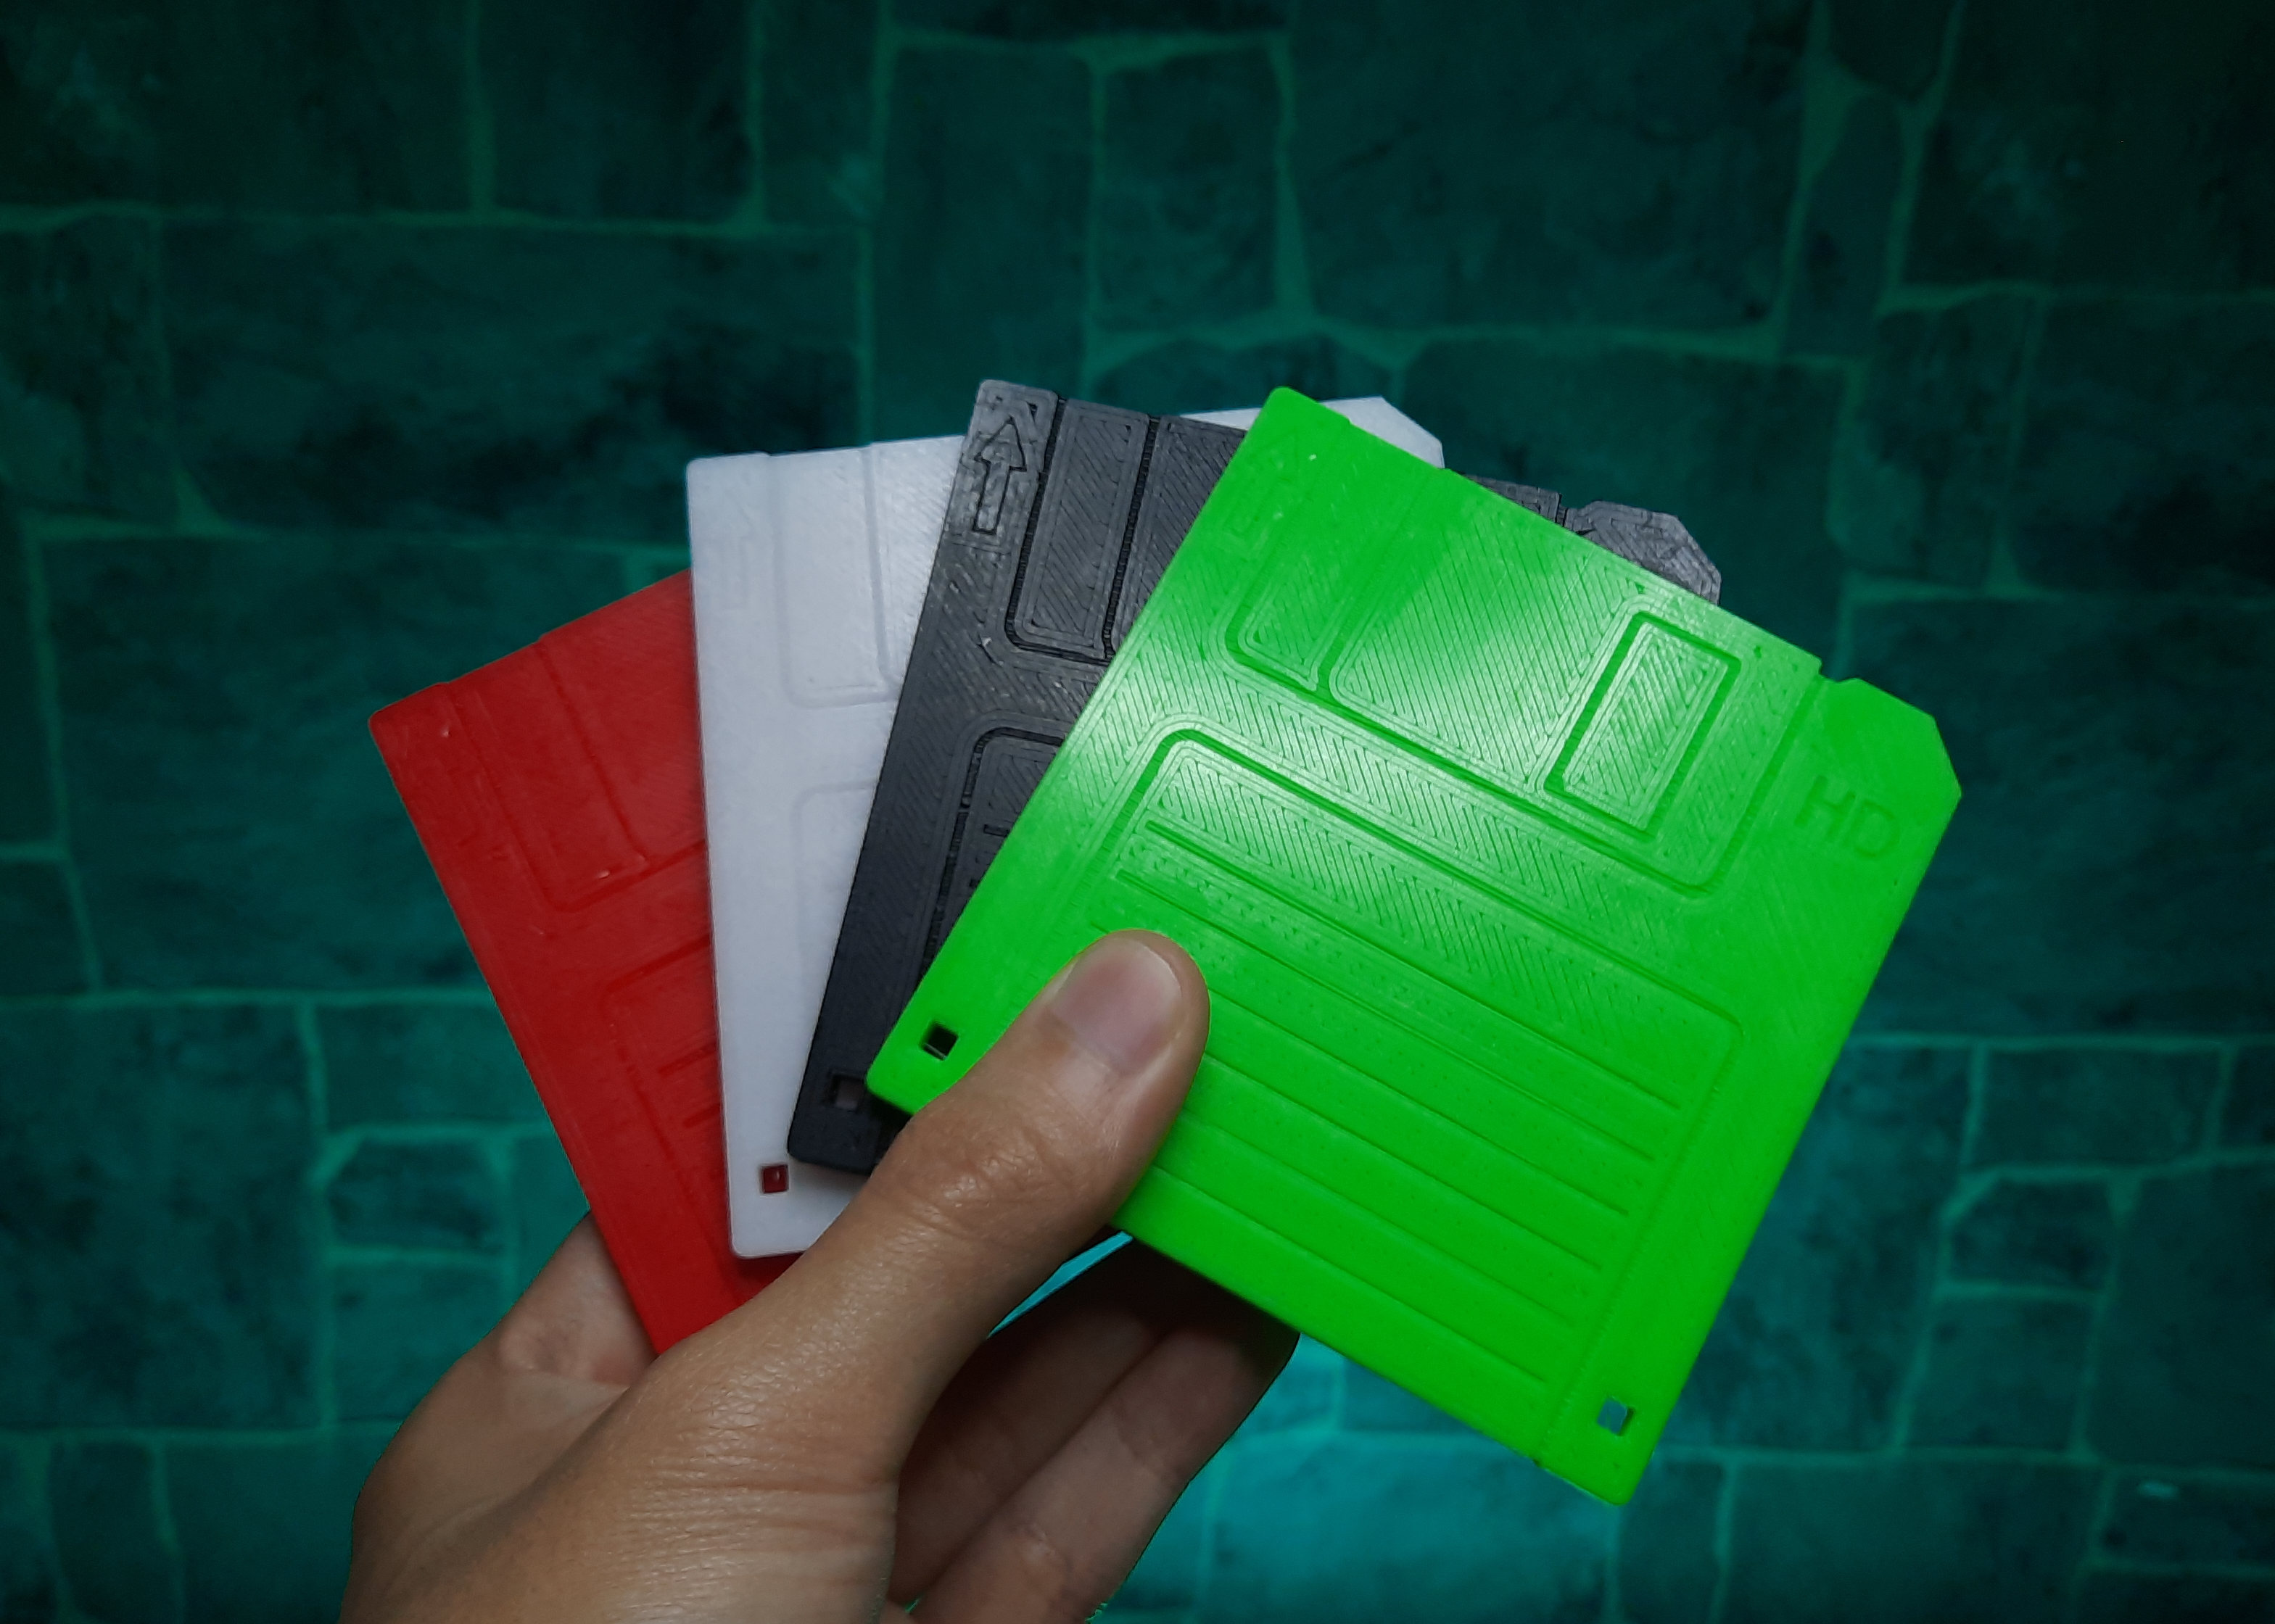 Floppy Disk Micro SD Card Holder